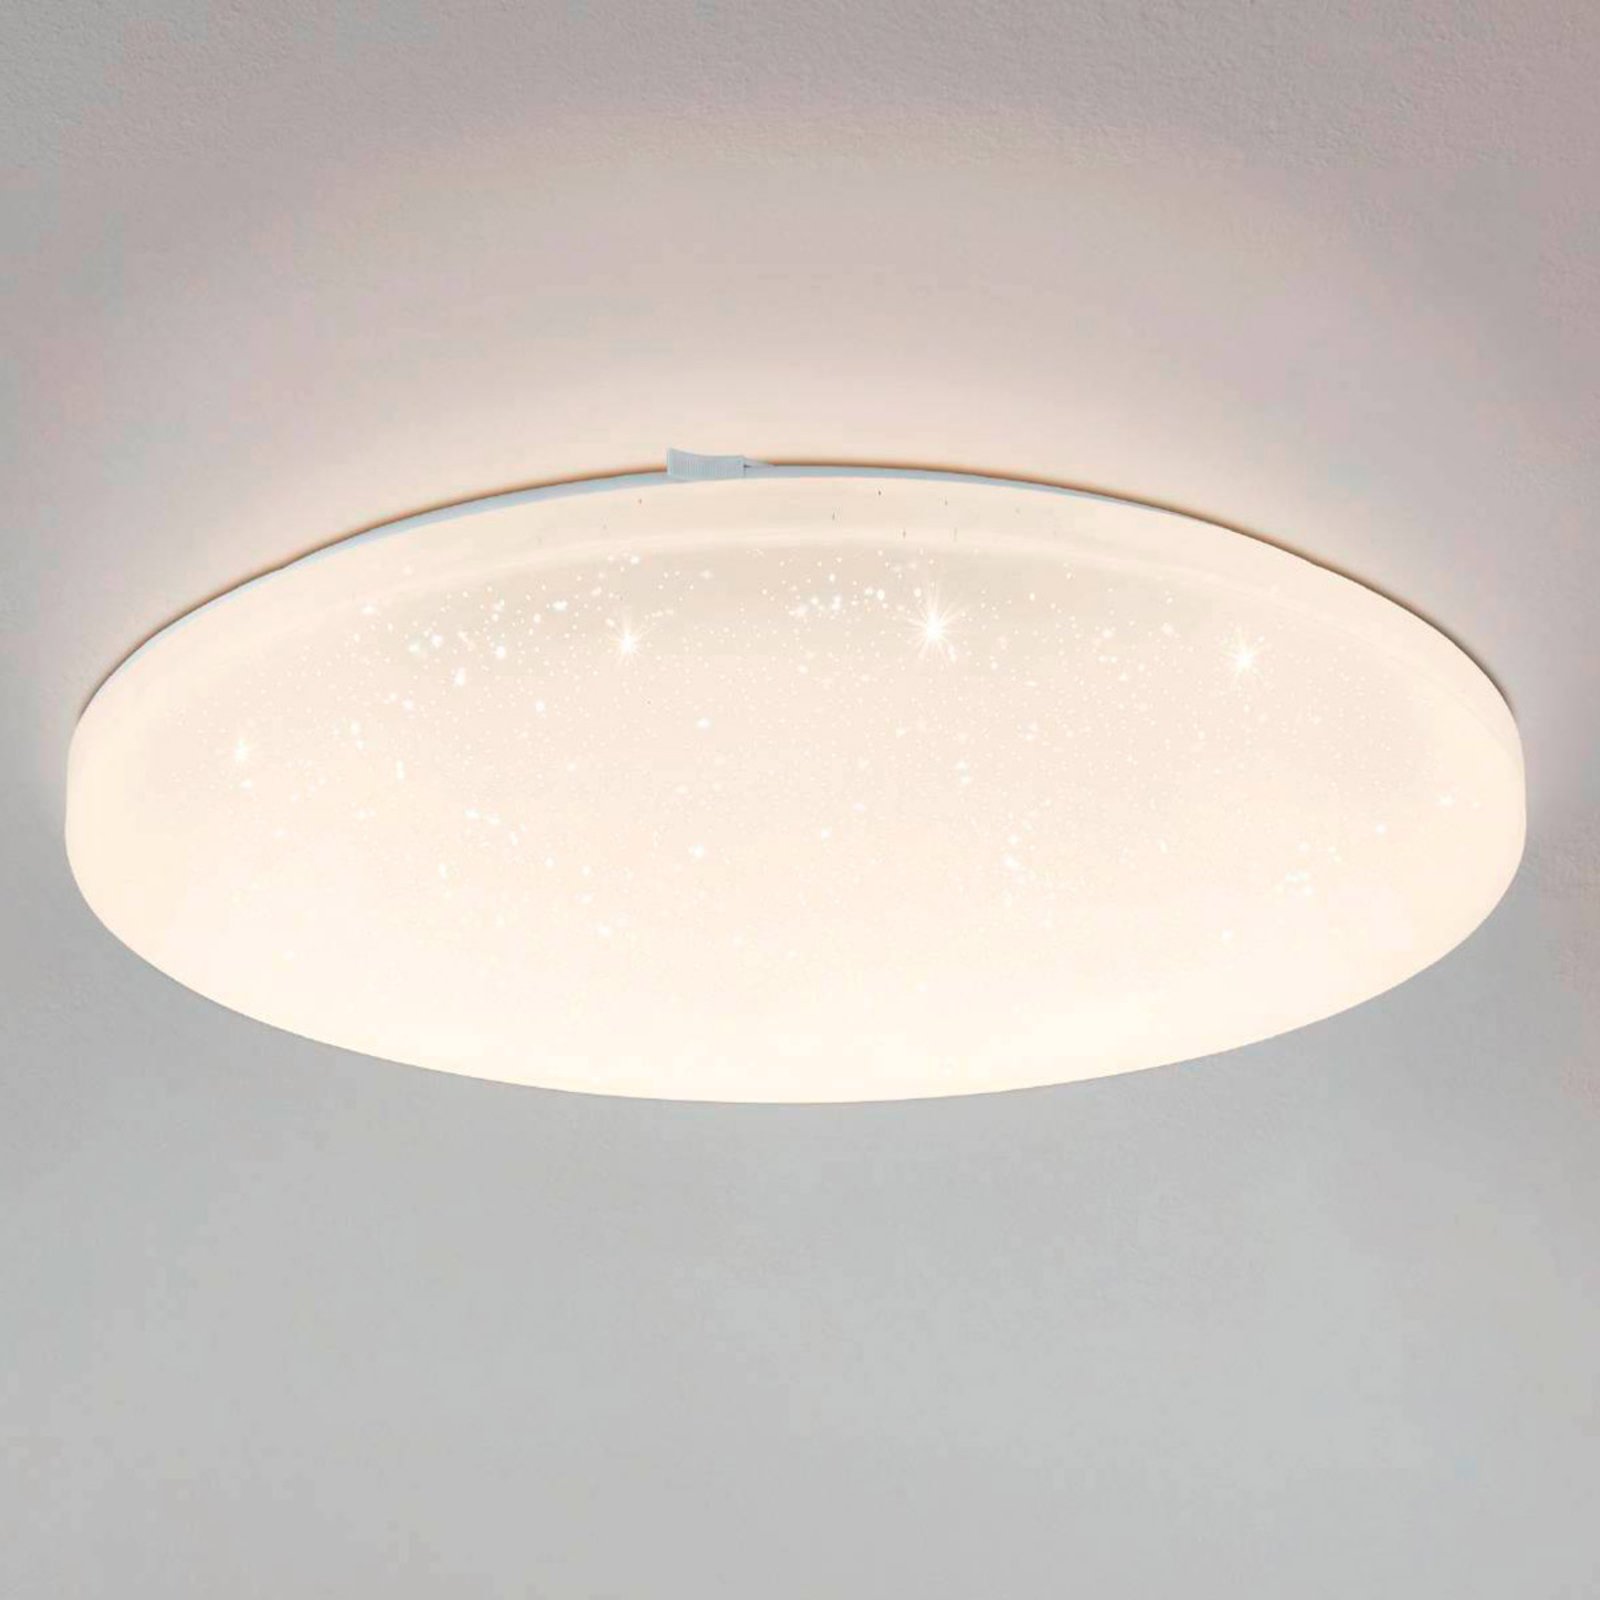 LED plafondlamp Frania-S met kristaleffect Ø 43cm